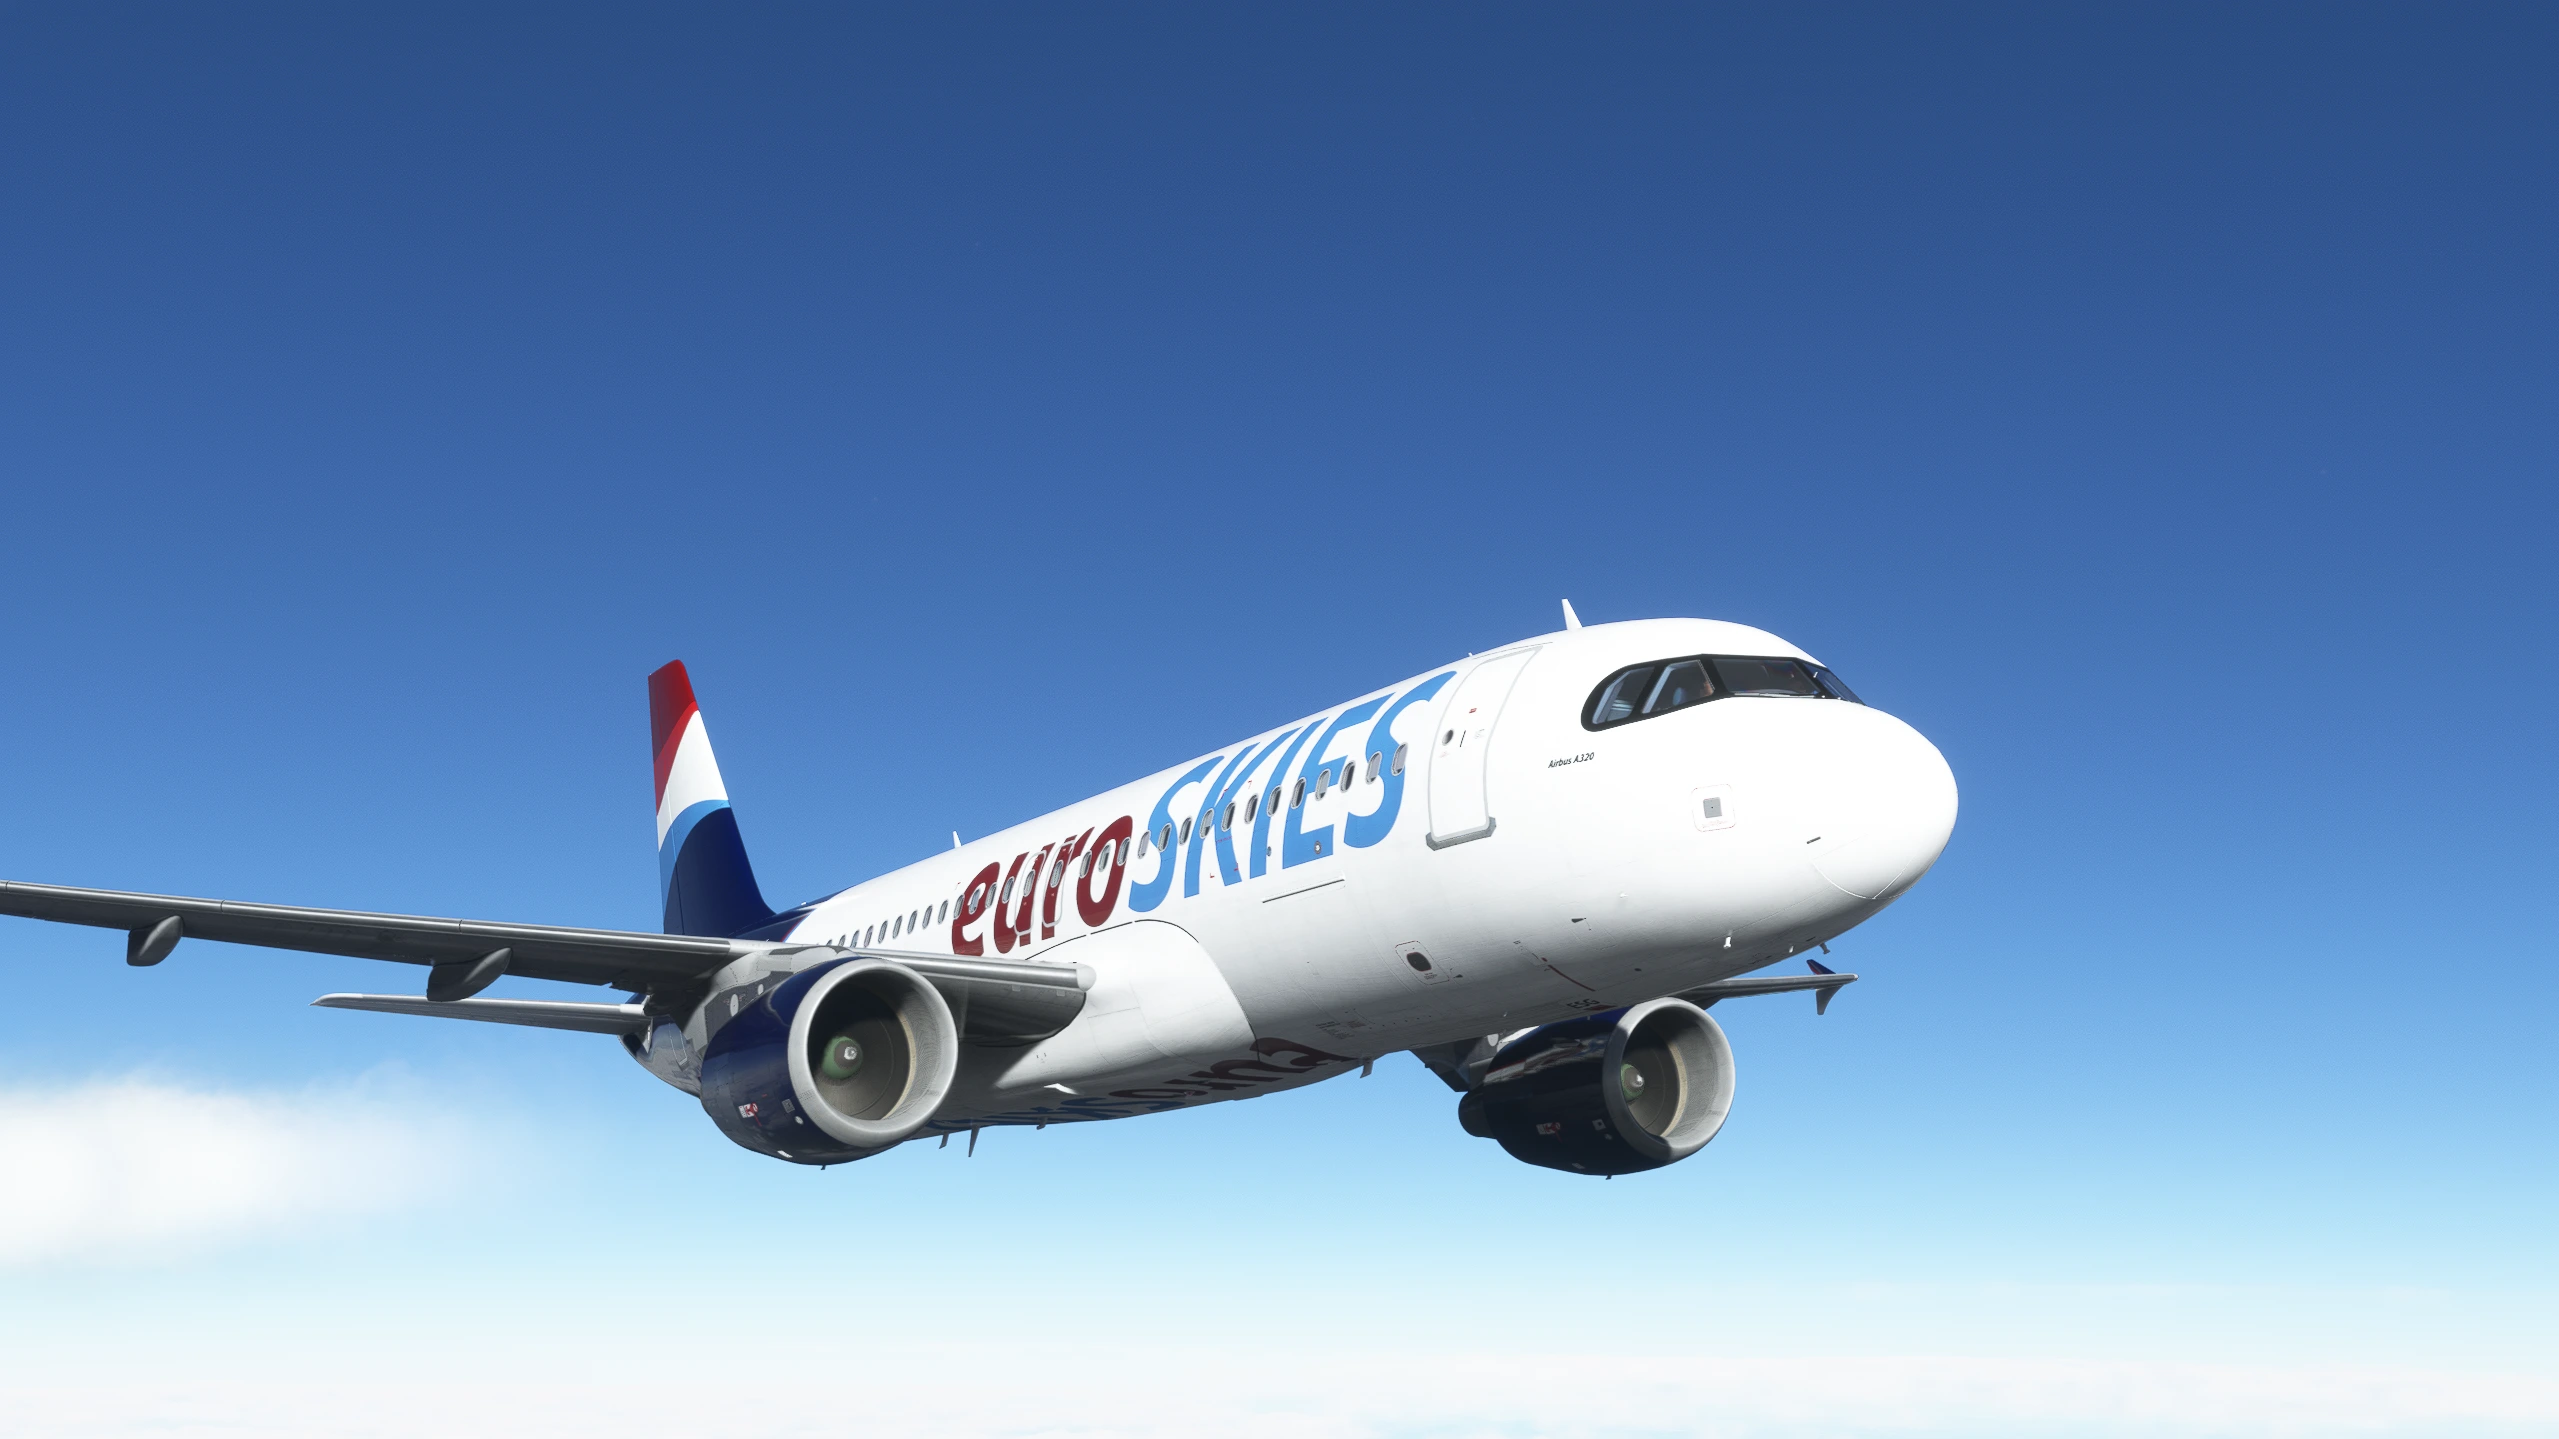 euroSKIES Airbus kreuzt unter blauem Himmel